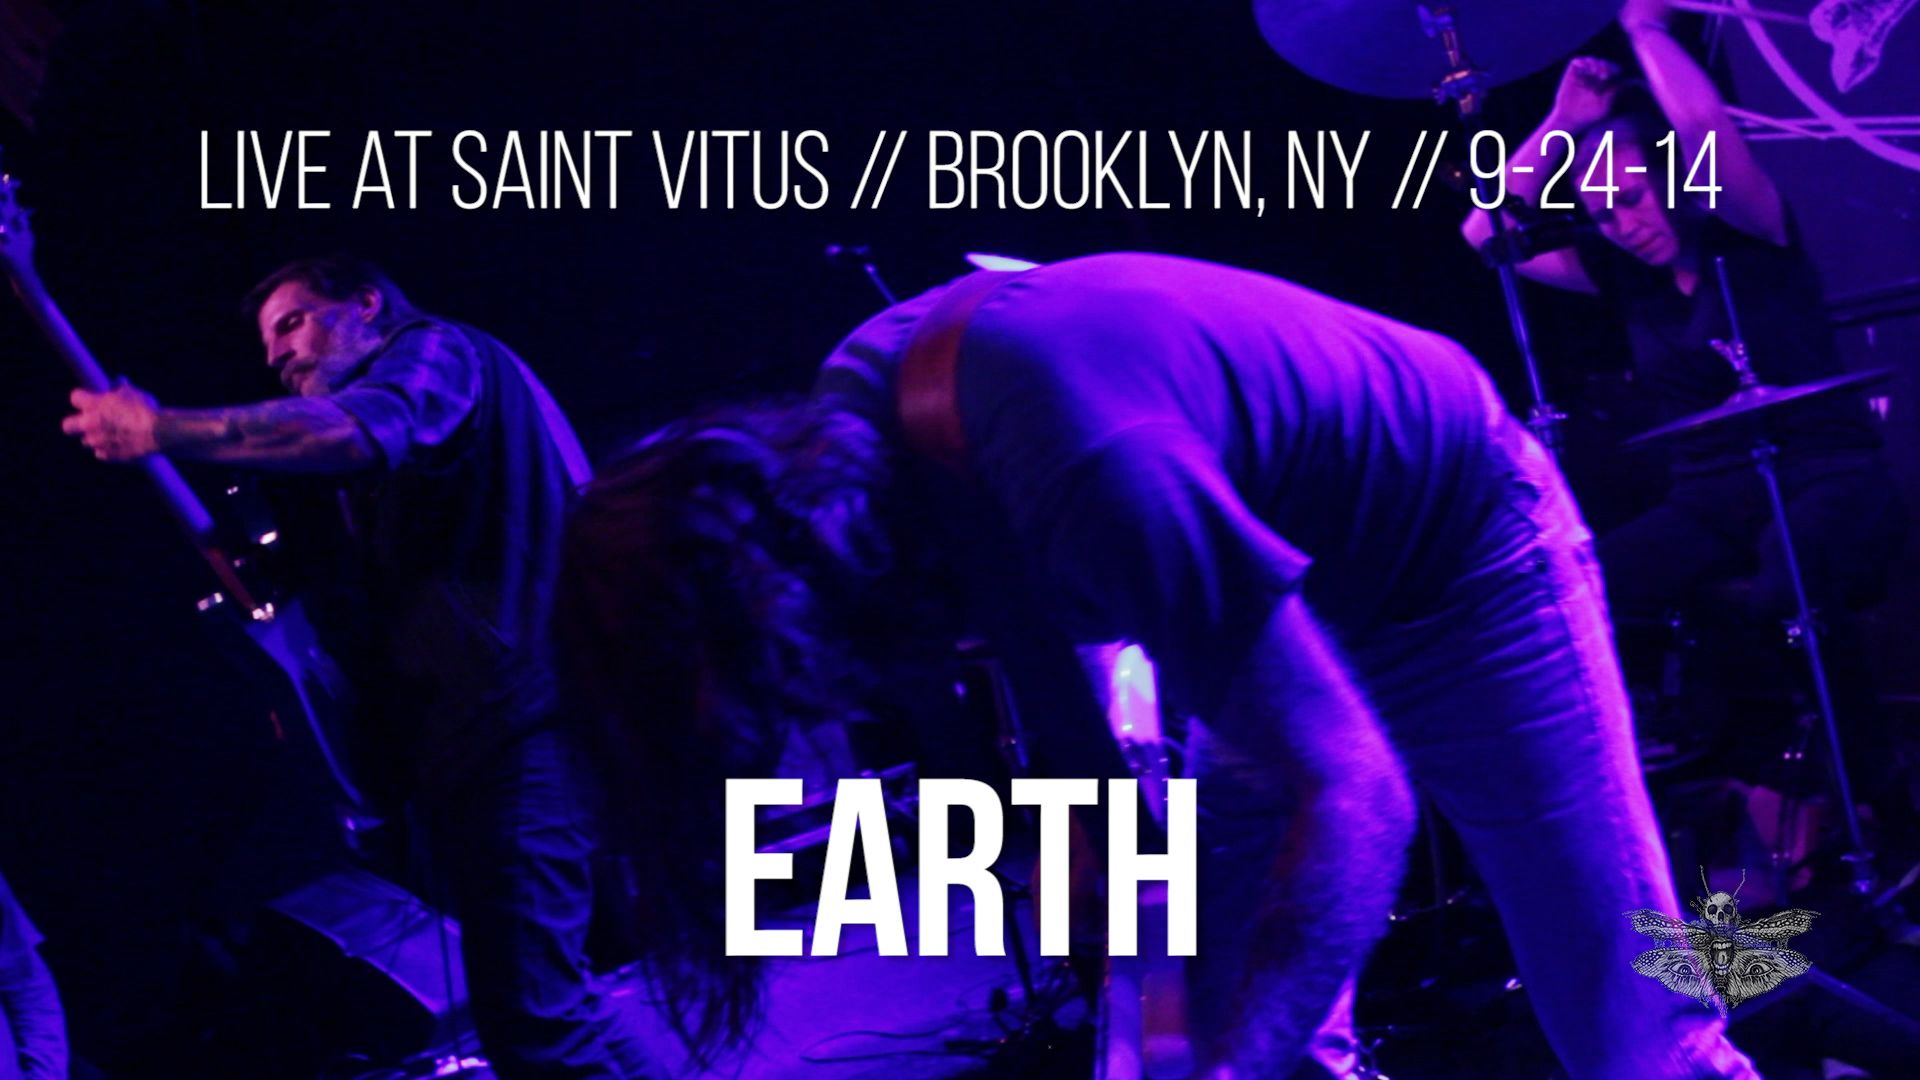 Earth at Saint Vitus